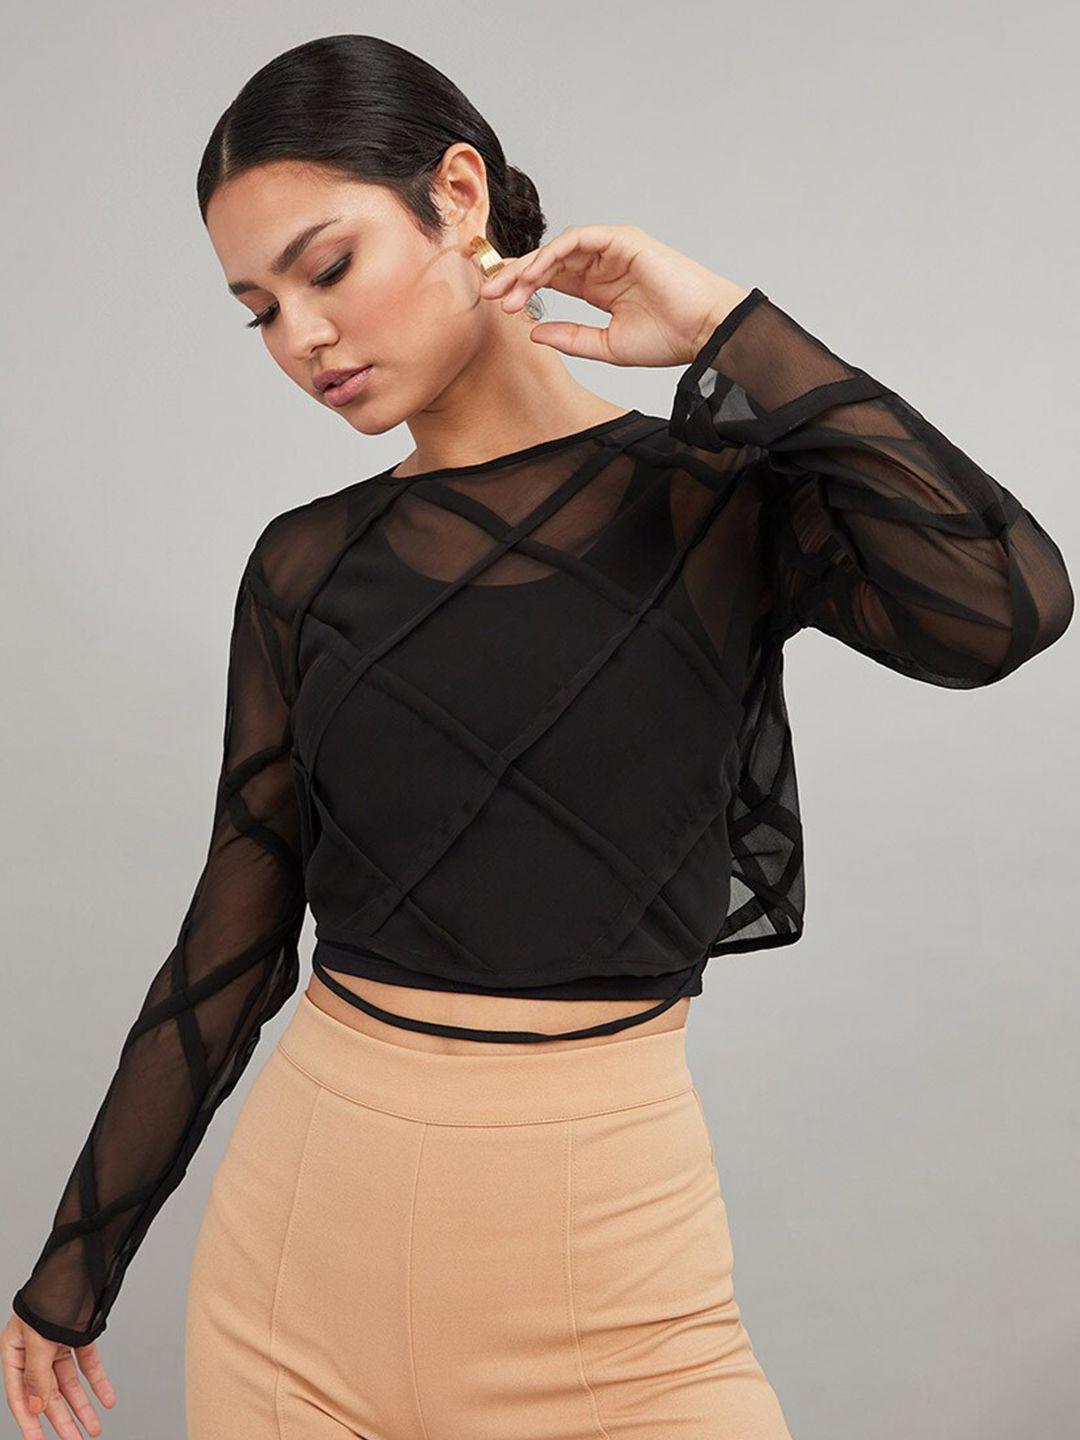 styli-black-crisscross-pattern-sheer-blouse-with-tie-detail